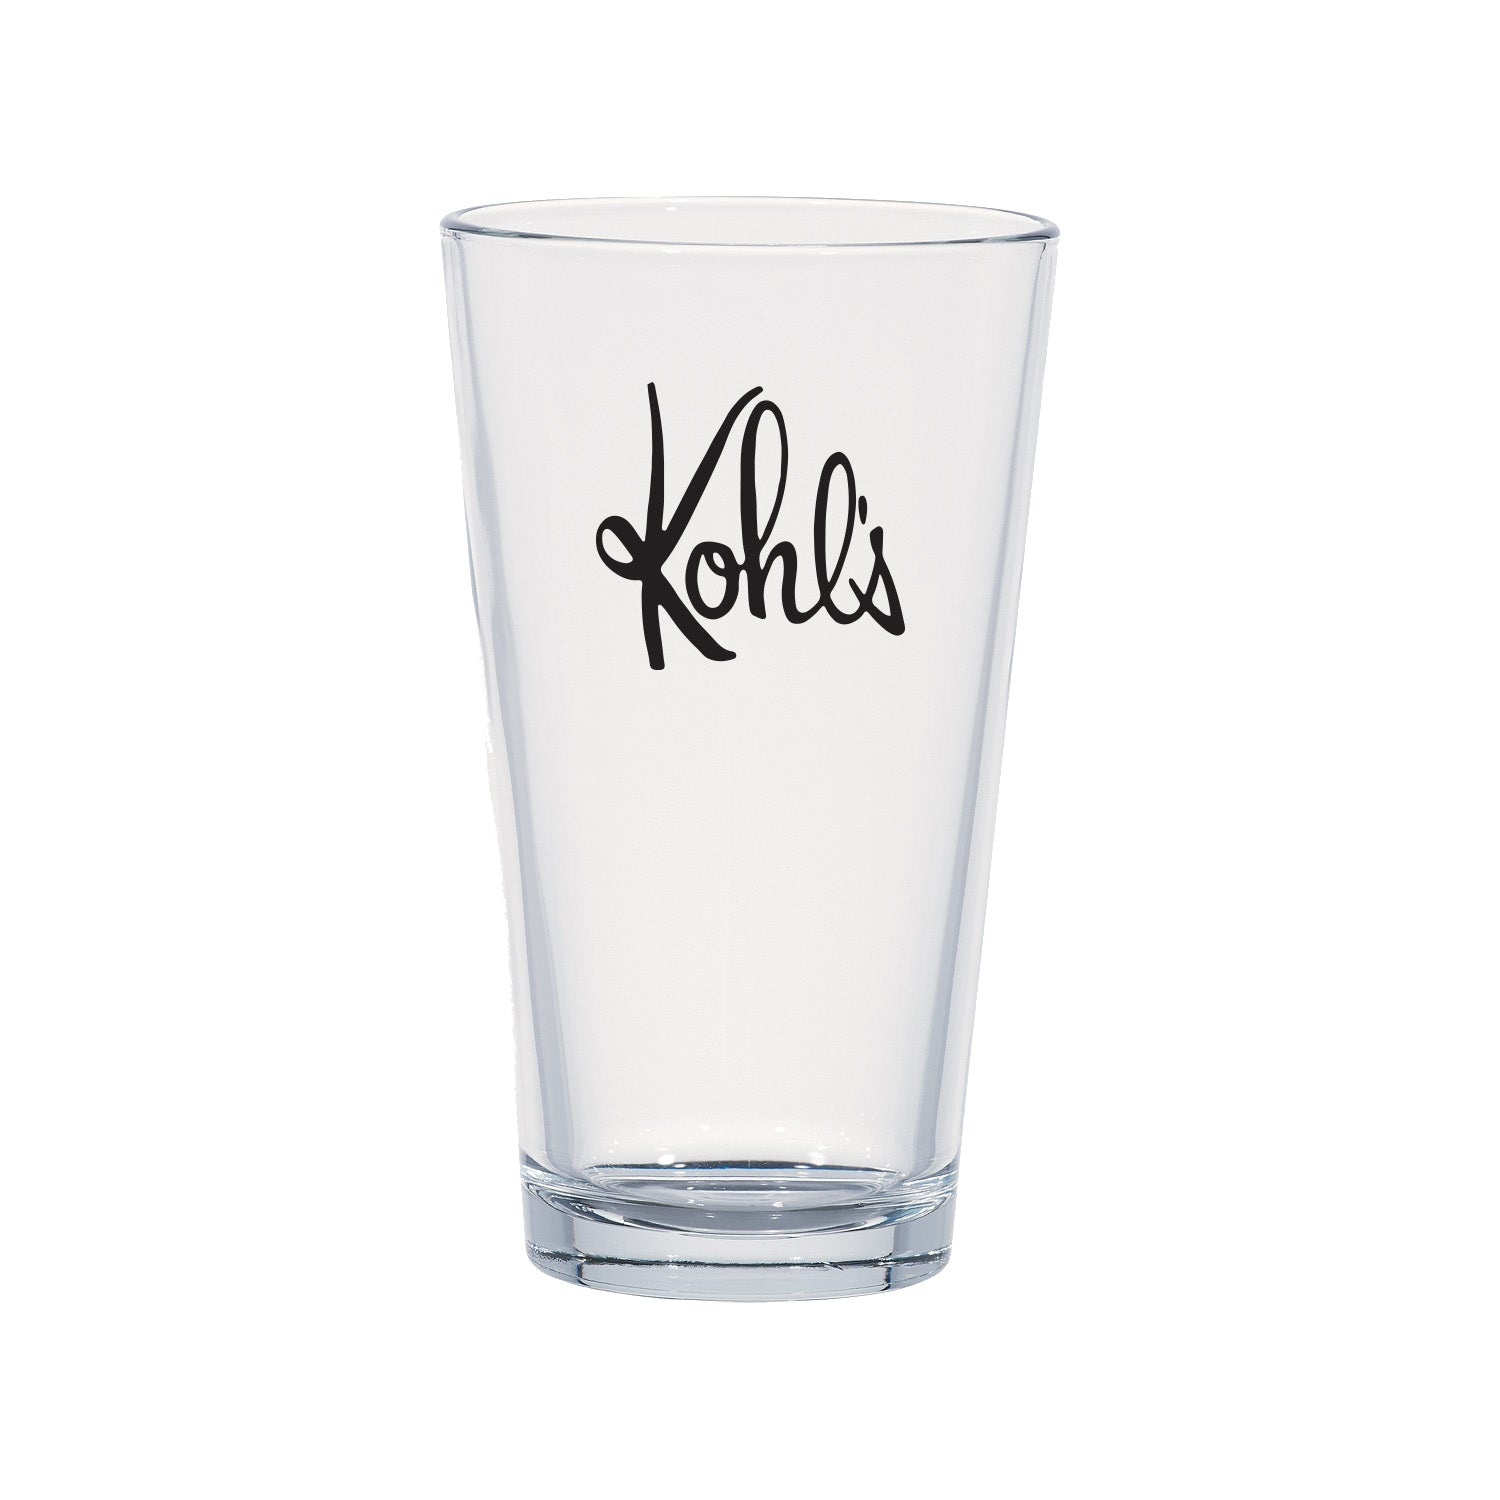 Kohl's Script Pint Glass